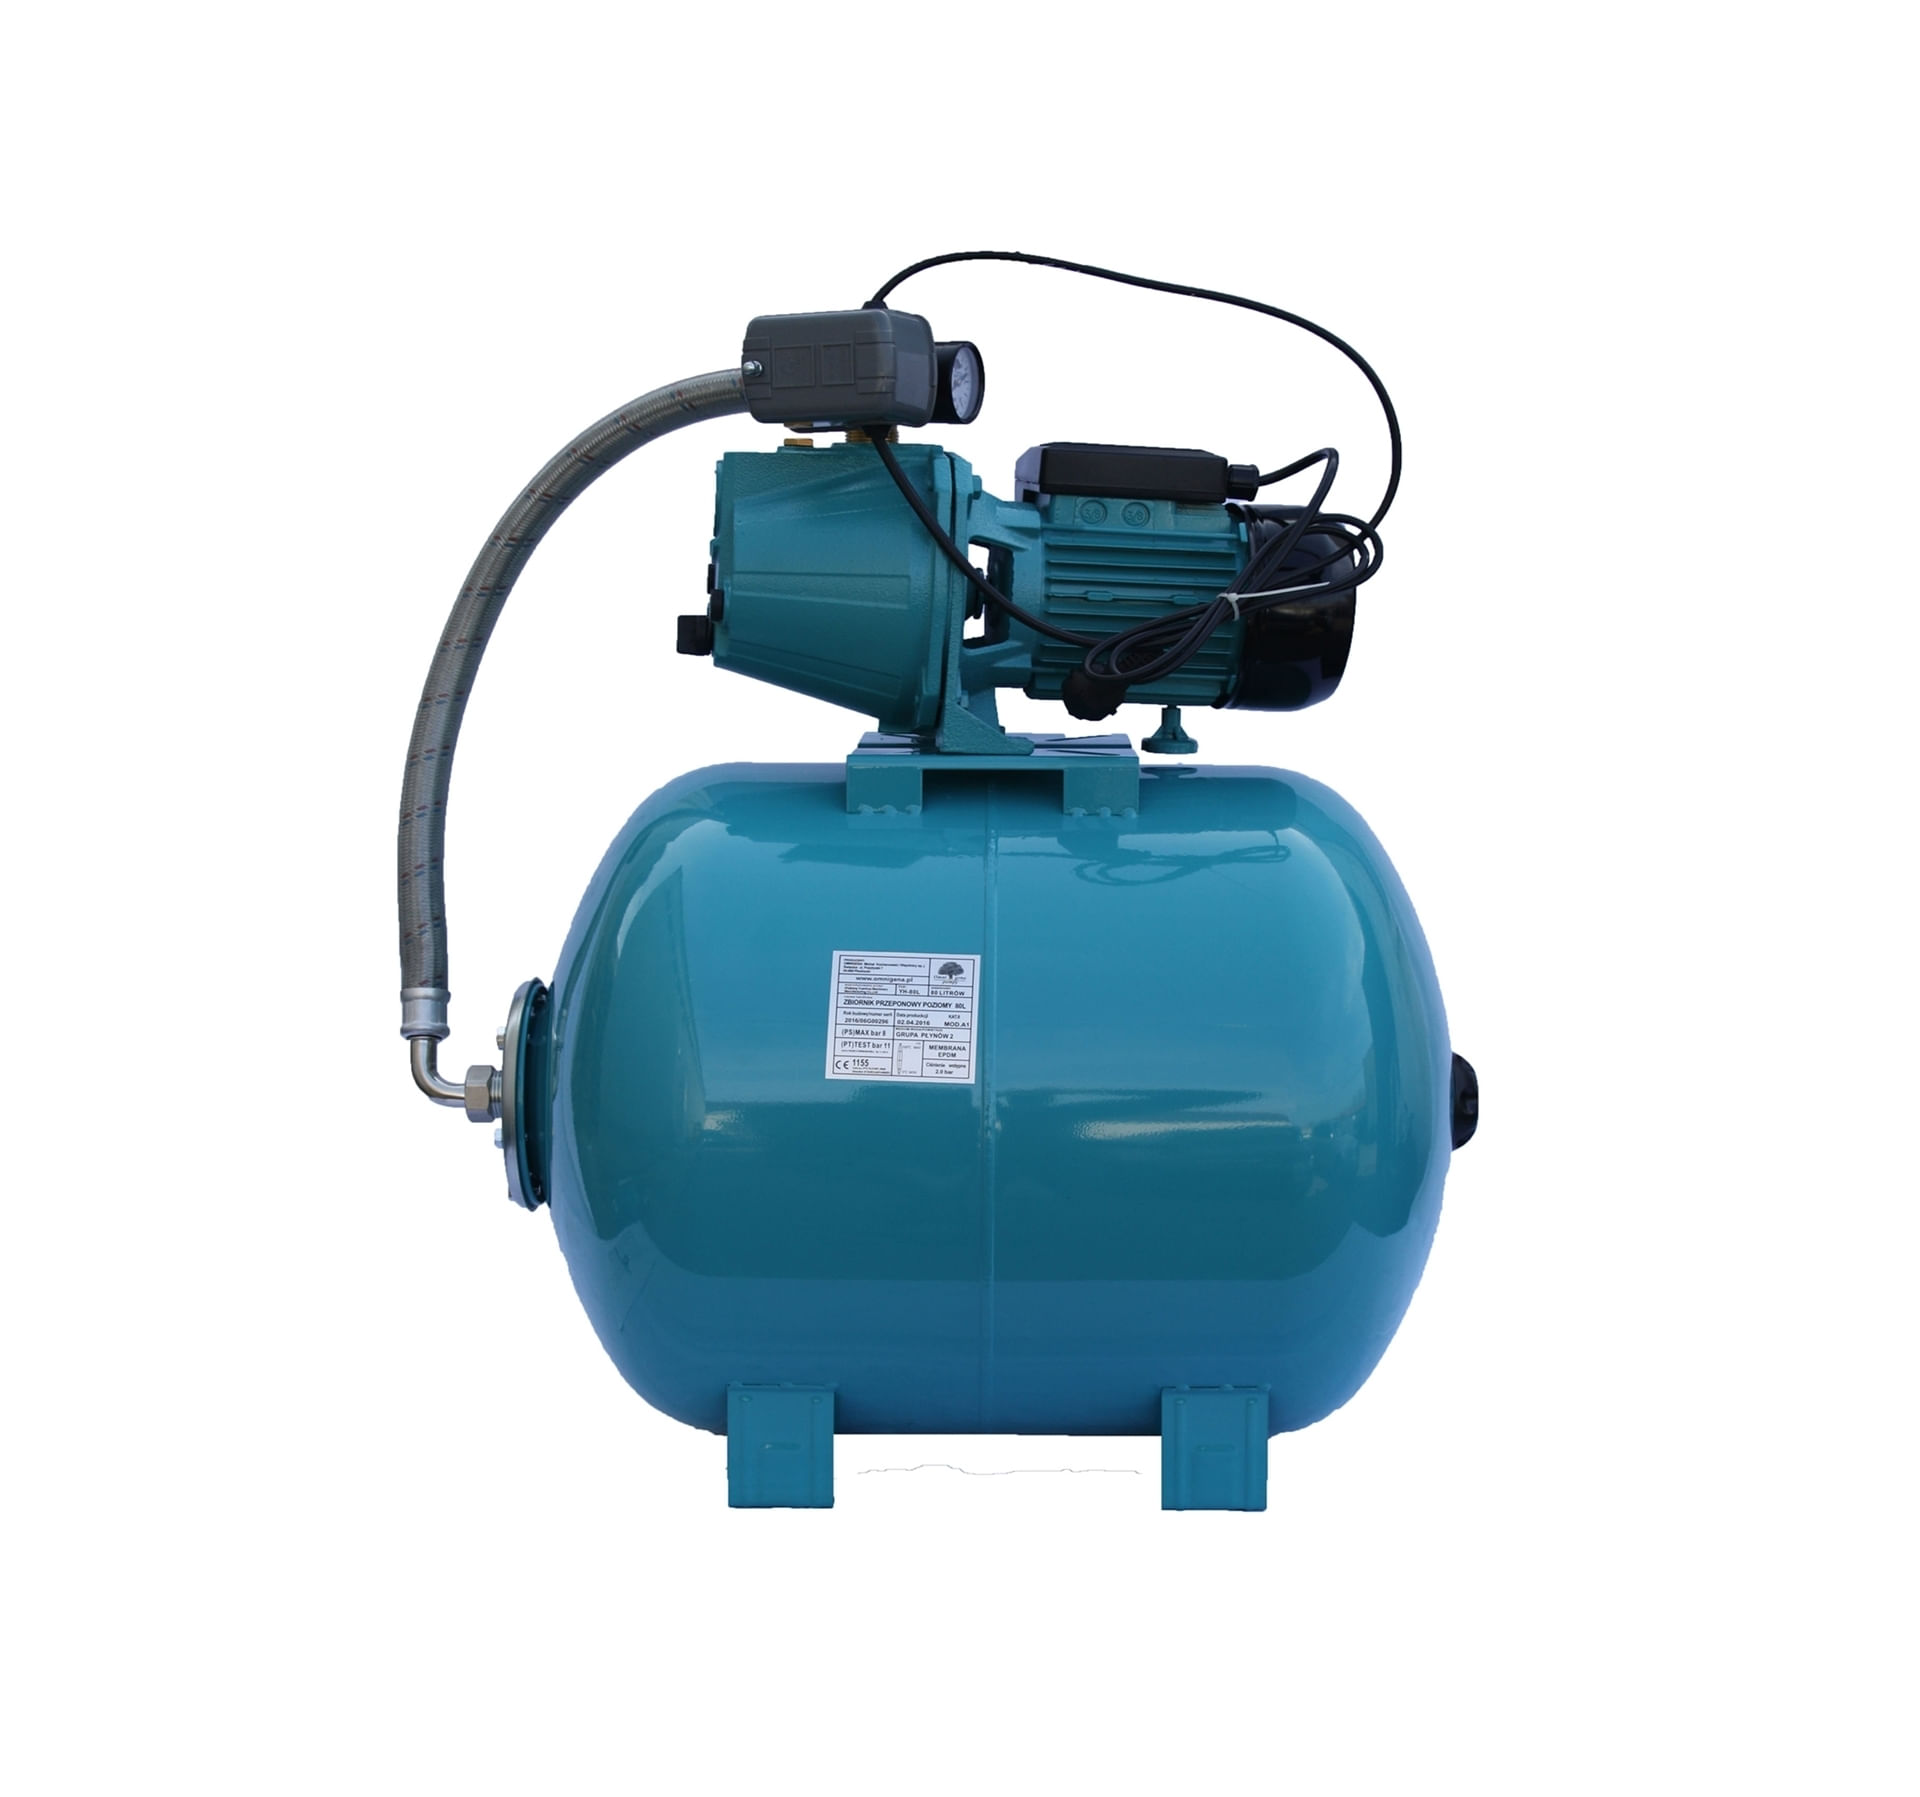 Hidrofor APC JY 100A(a)/80 rezervor 80 litri, 1.5kW, 03020201/80